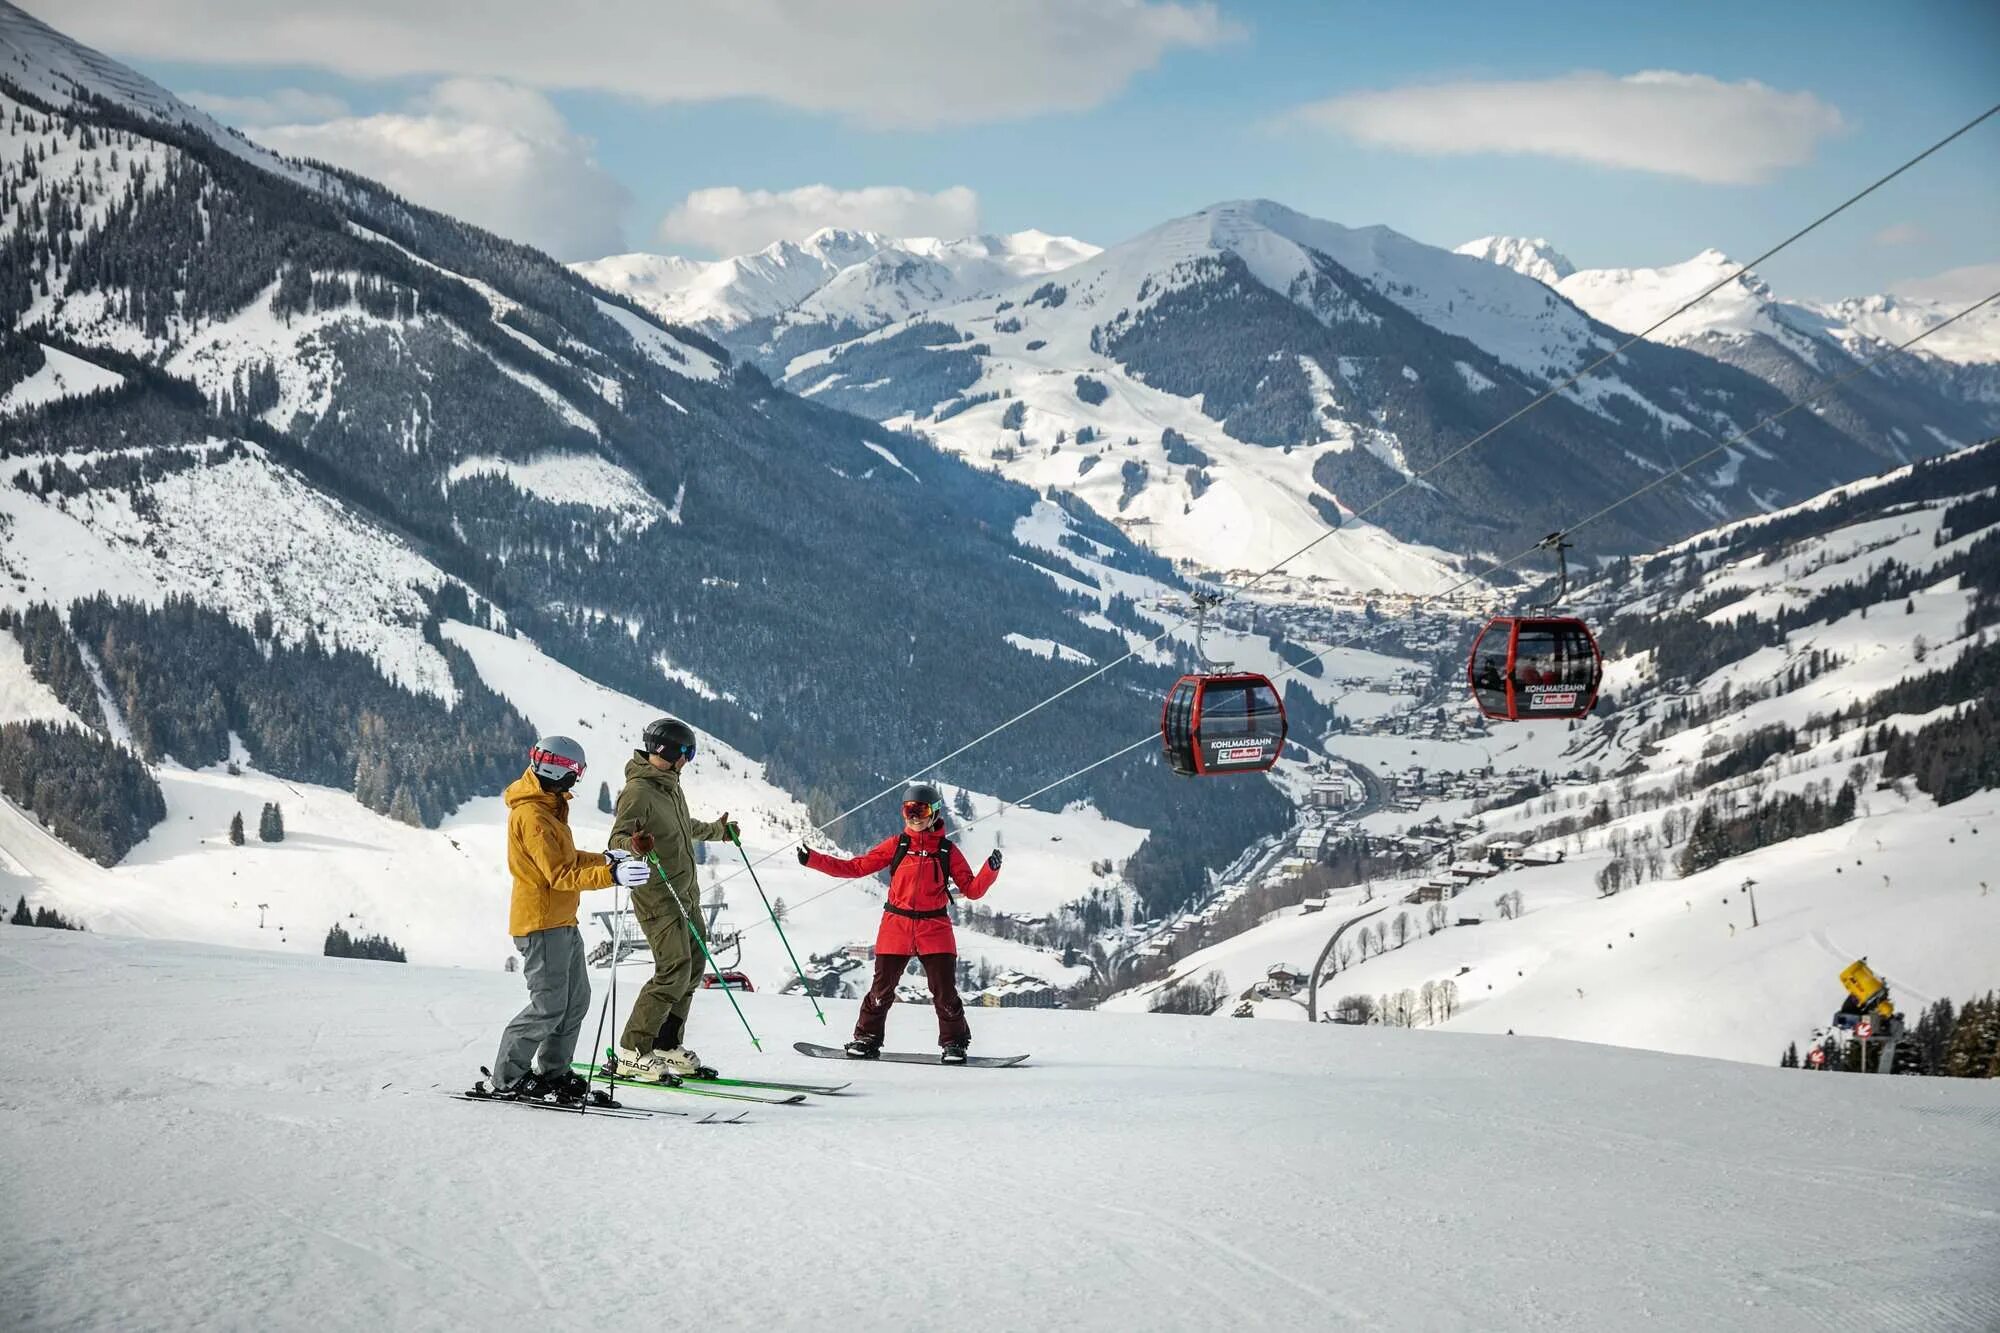 Skiing holiday. Горнолыжные курорты Австрии 2021. Горнолыжный спорт в Австрии. Горный курорт зарубежья. Самый крутой горнолыжный курорт в мире.